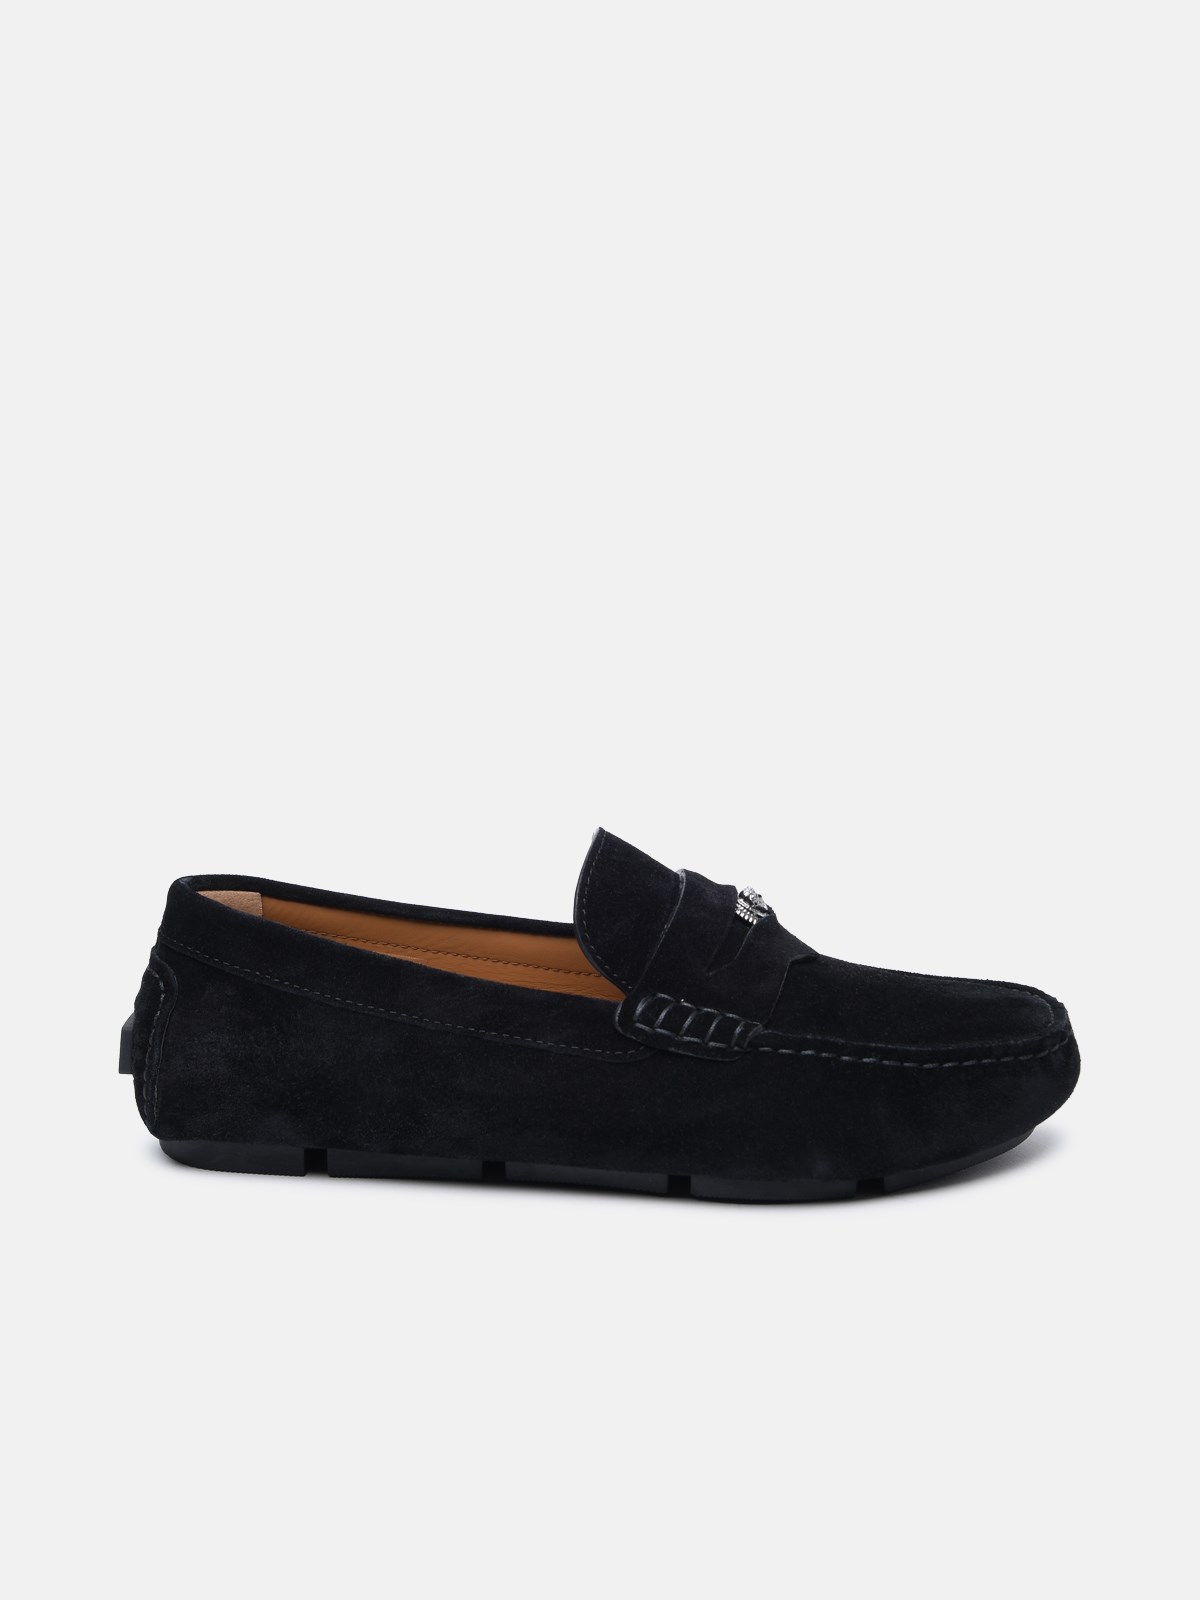 Versace Black Suede Loafers